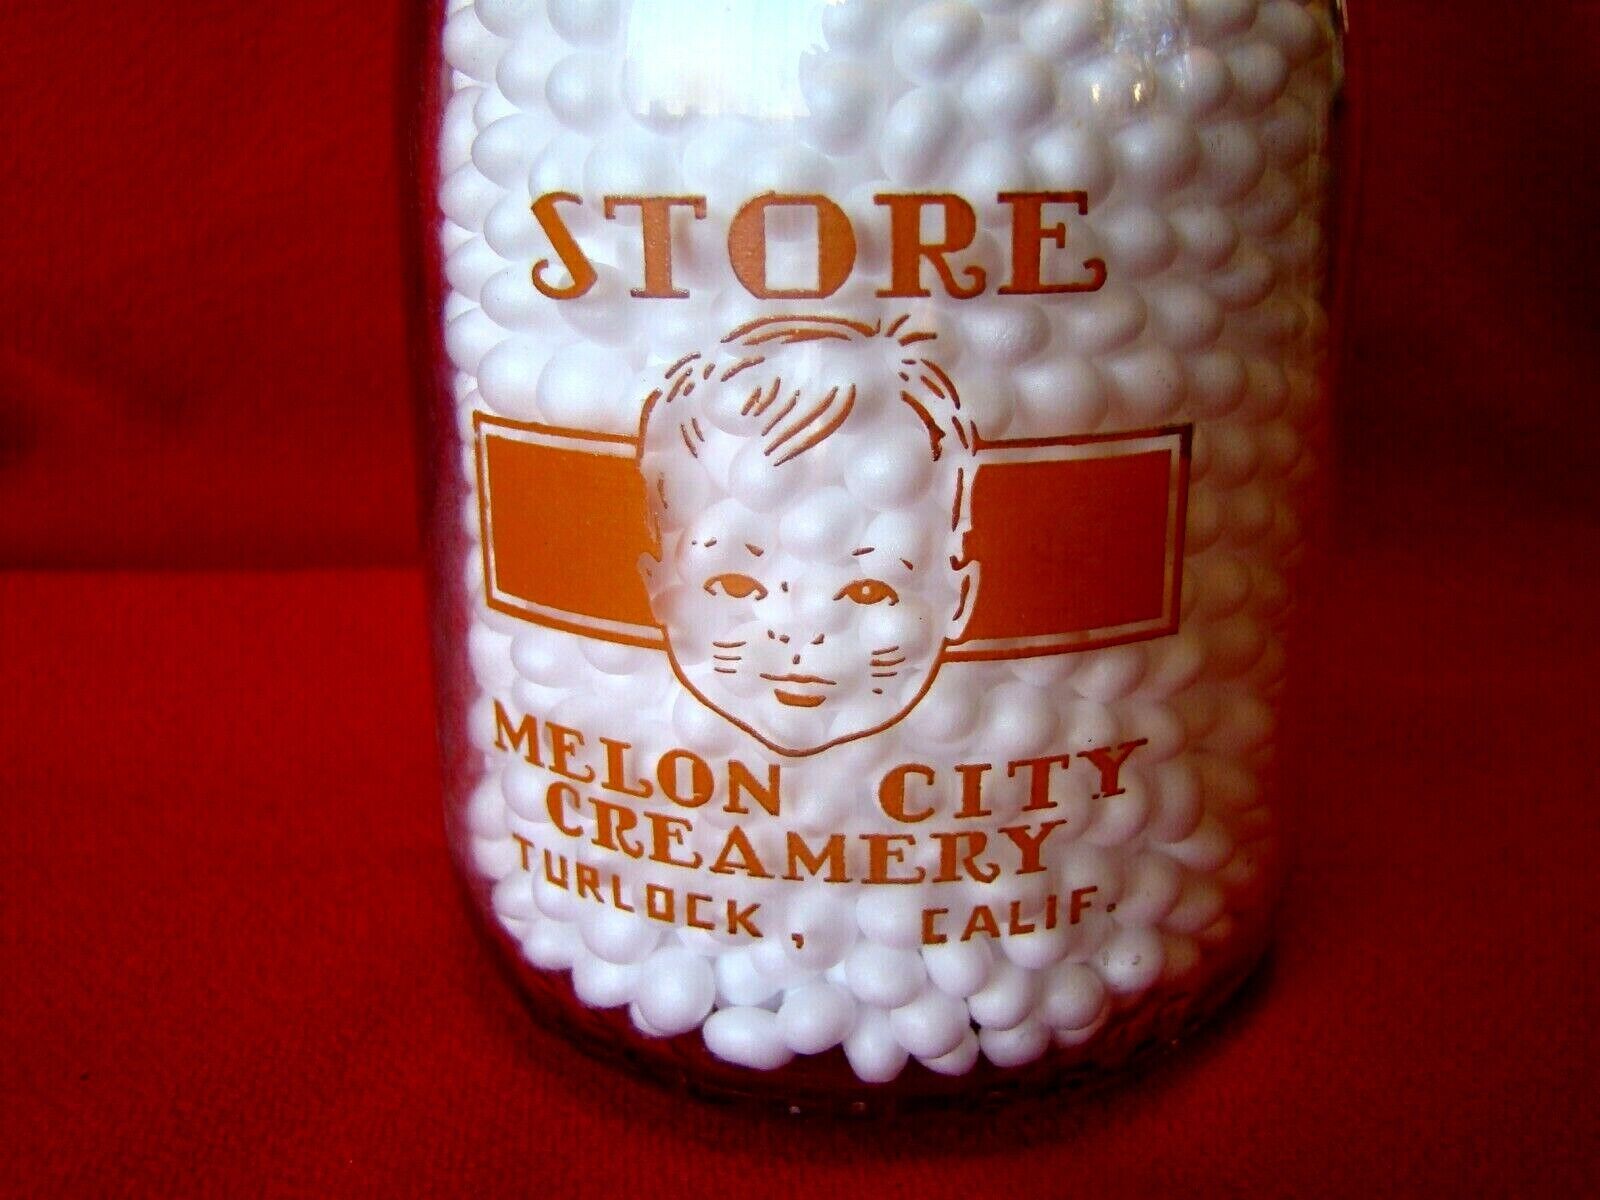 Vintage - Melon City Creamery - Turlock California - One Pint Store Milk Bottle